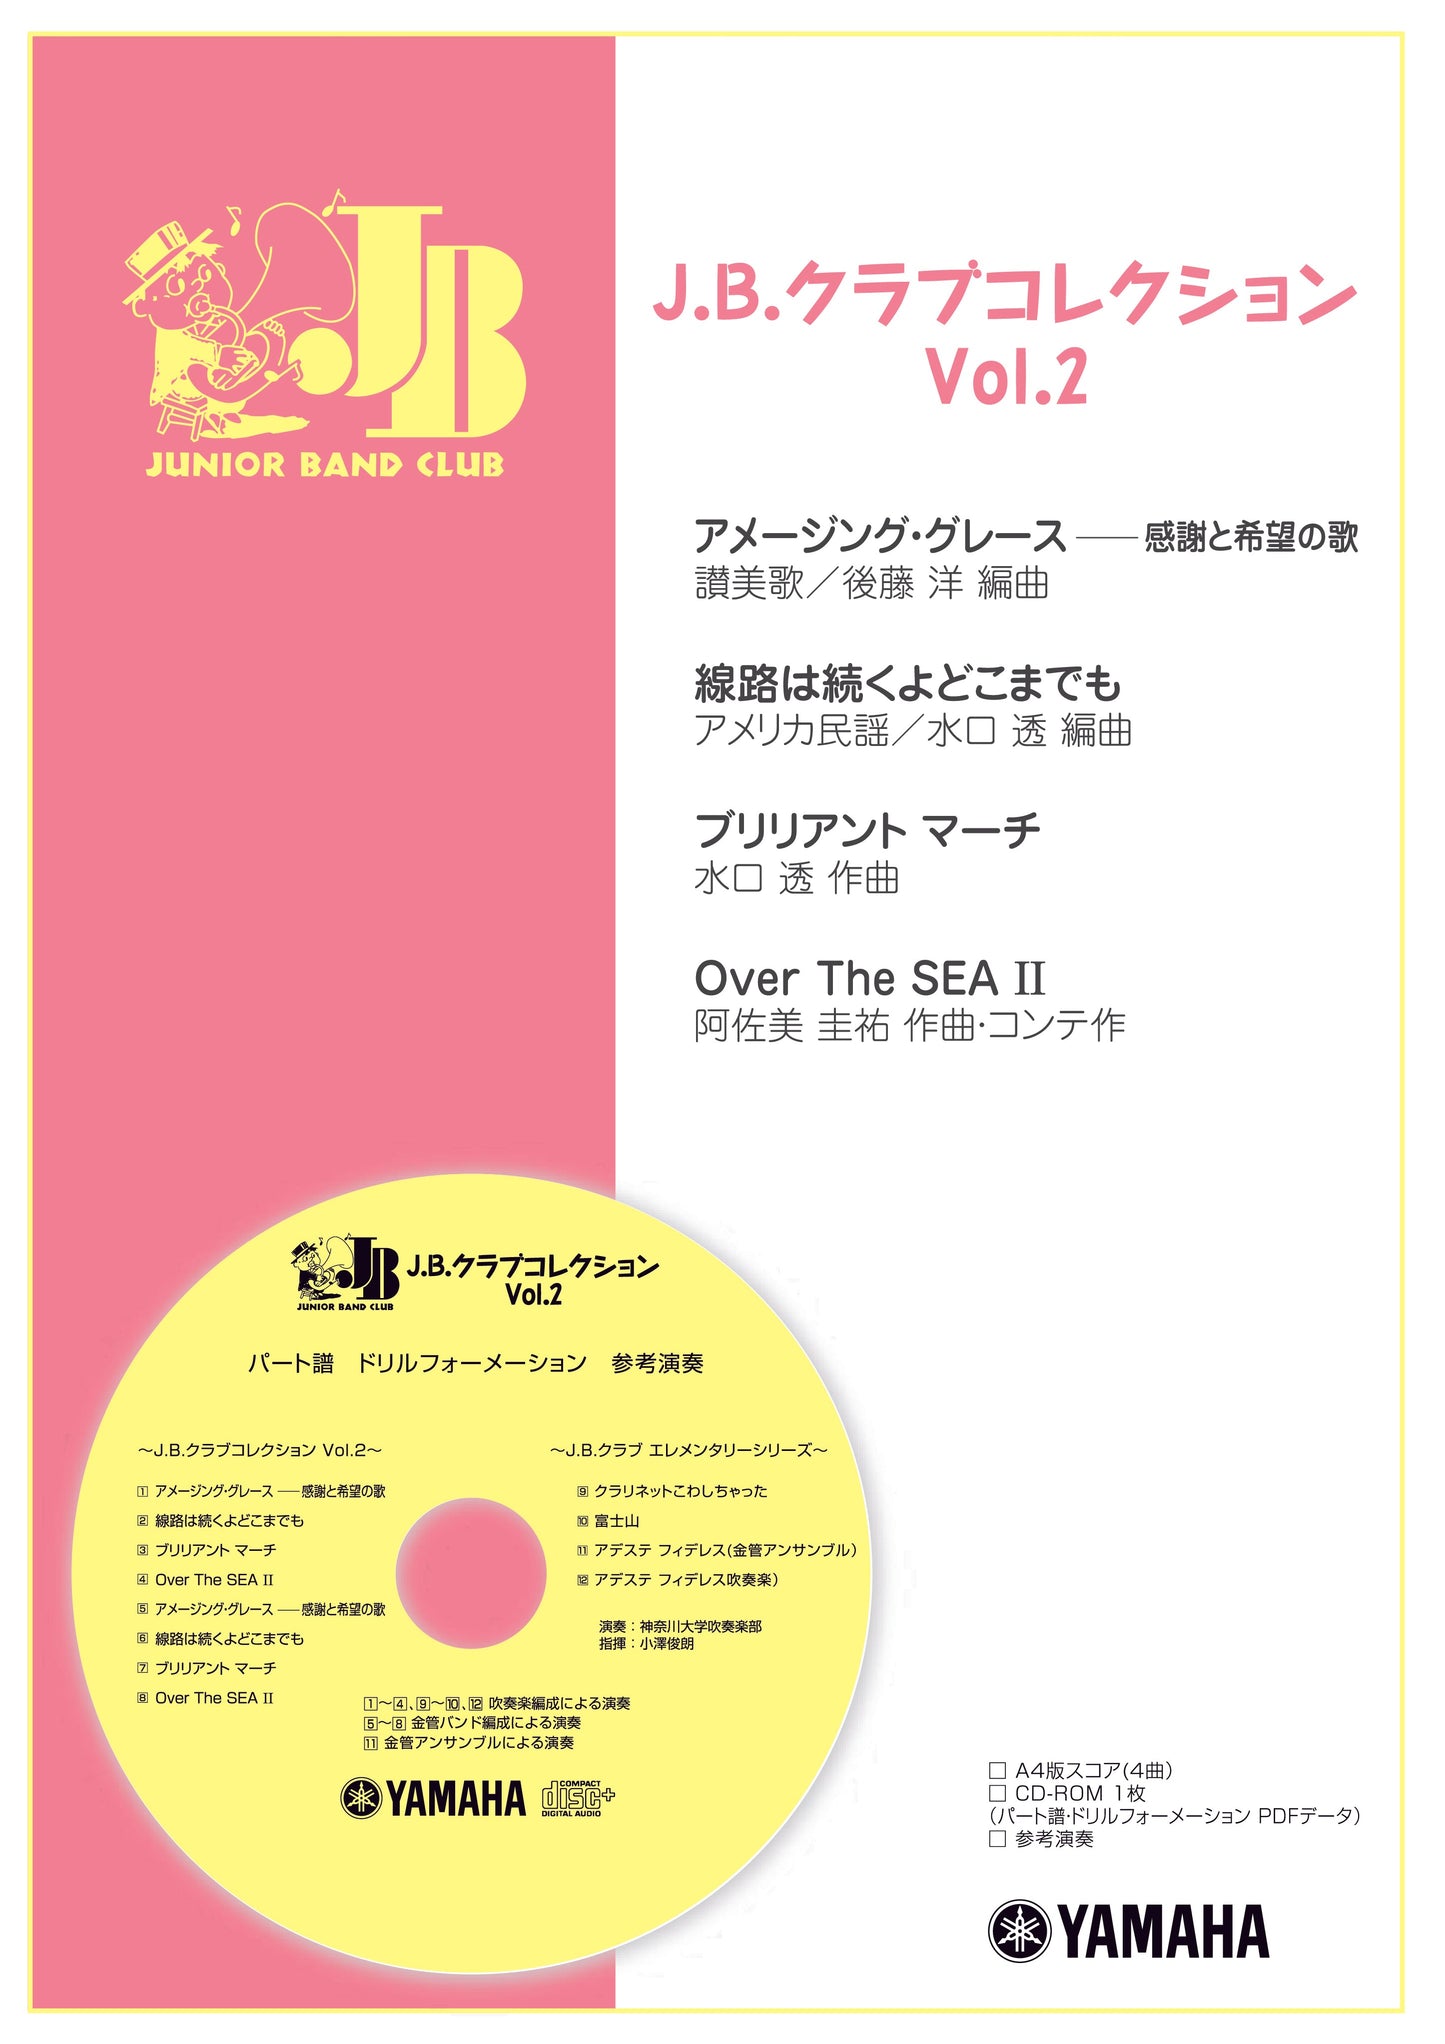 J.B.クラブ J.B.クラブ コレクション Vol.2 (2012年度発刊)